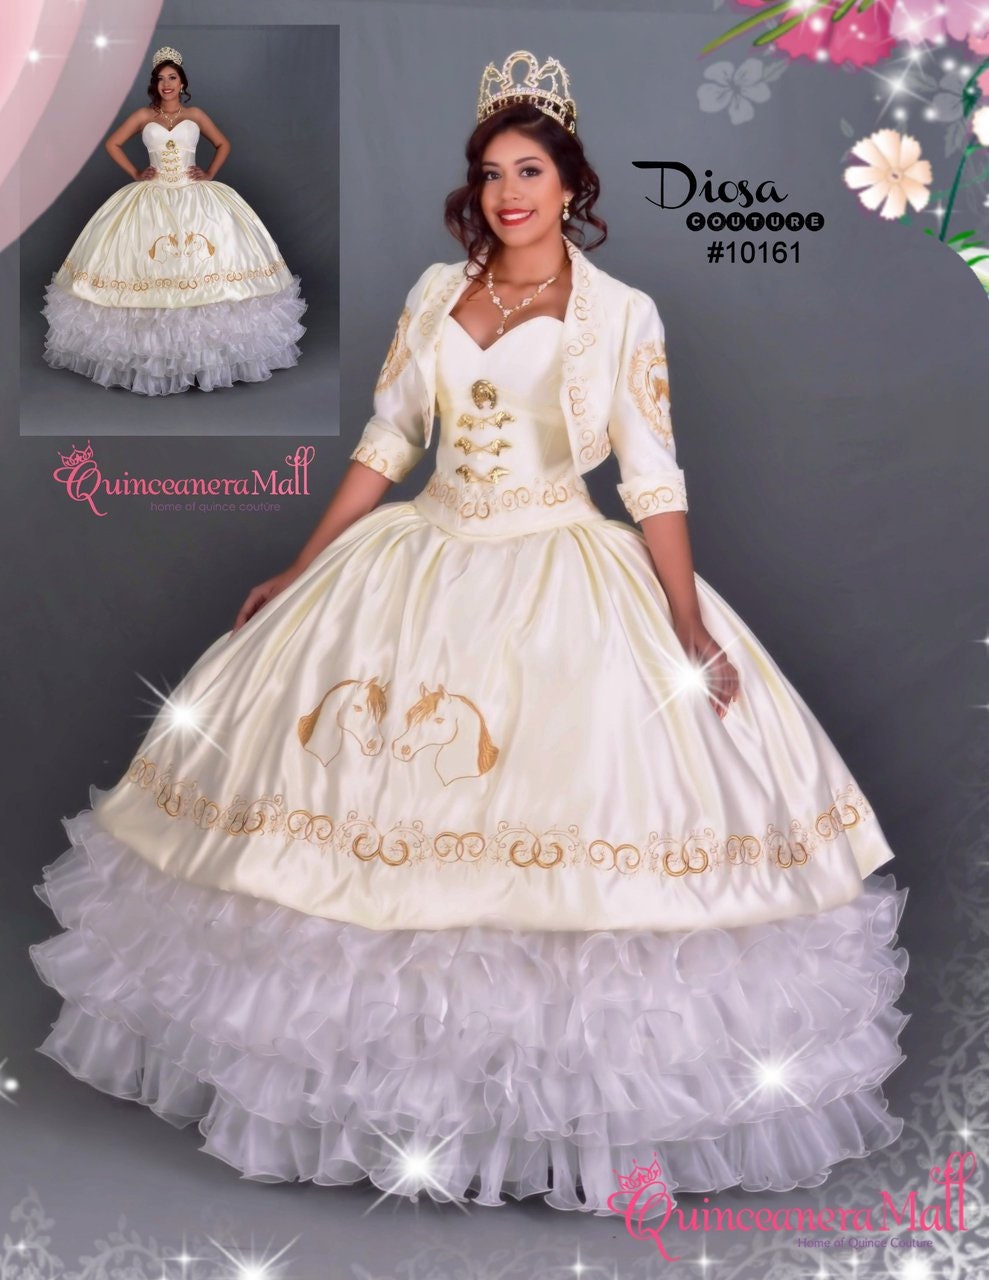 Diosa Charra dresses